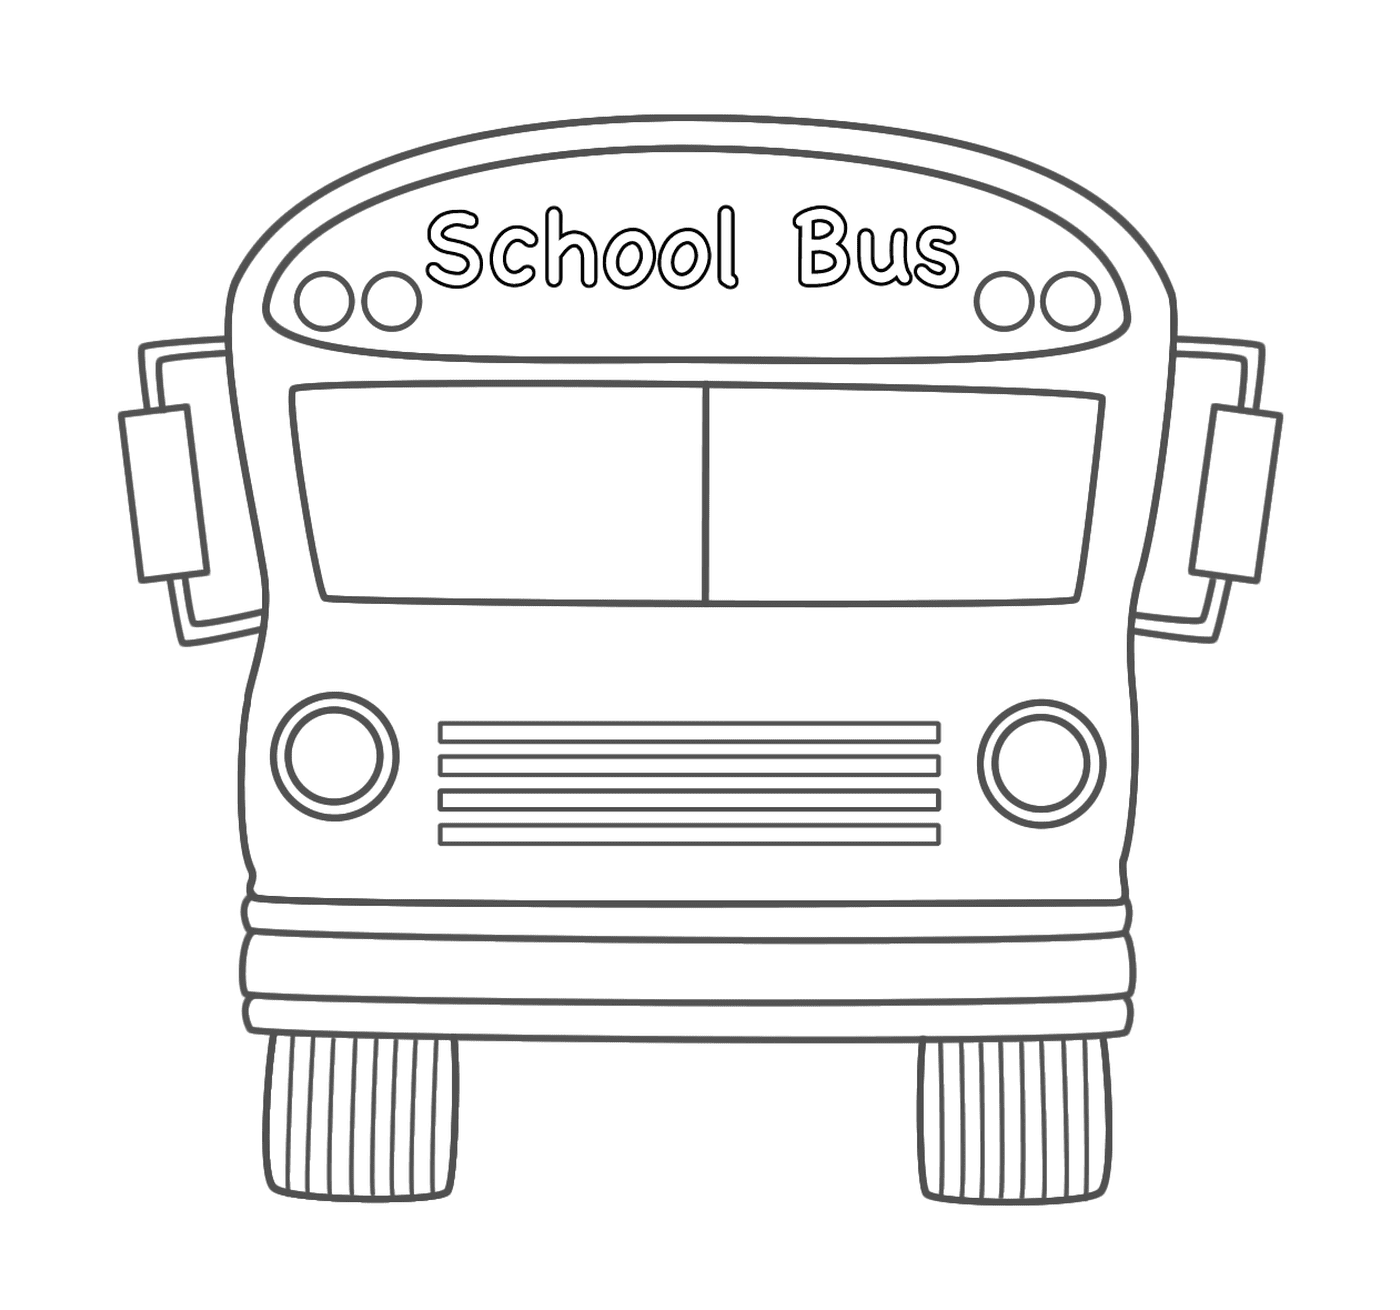  Un autobús escolar 